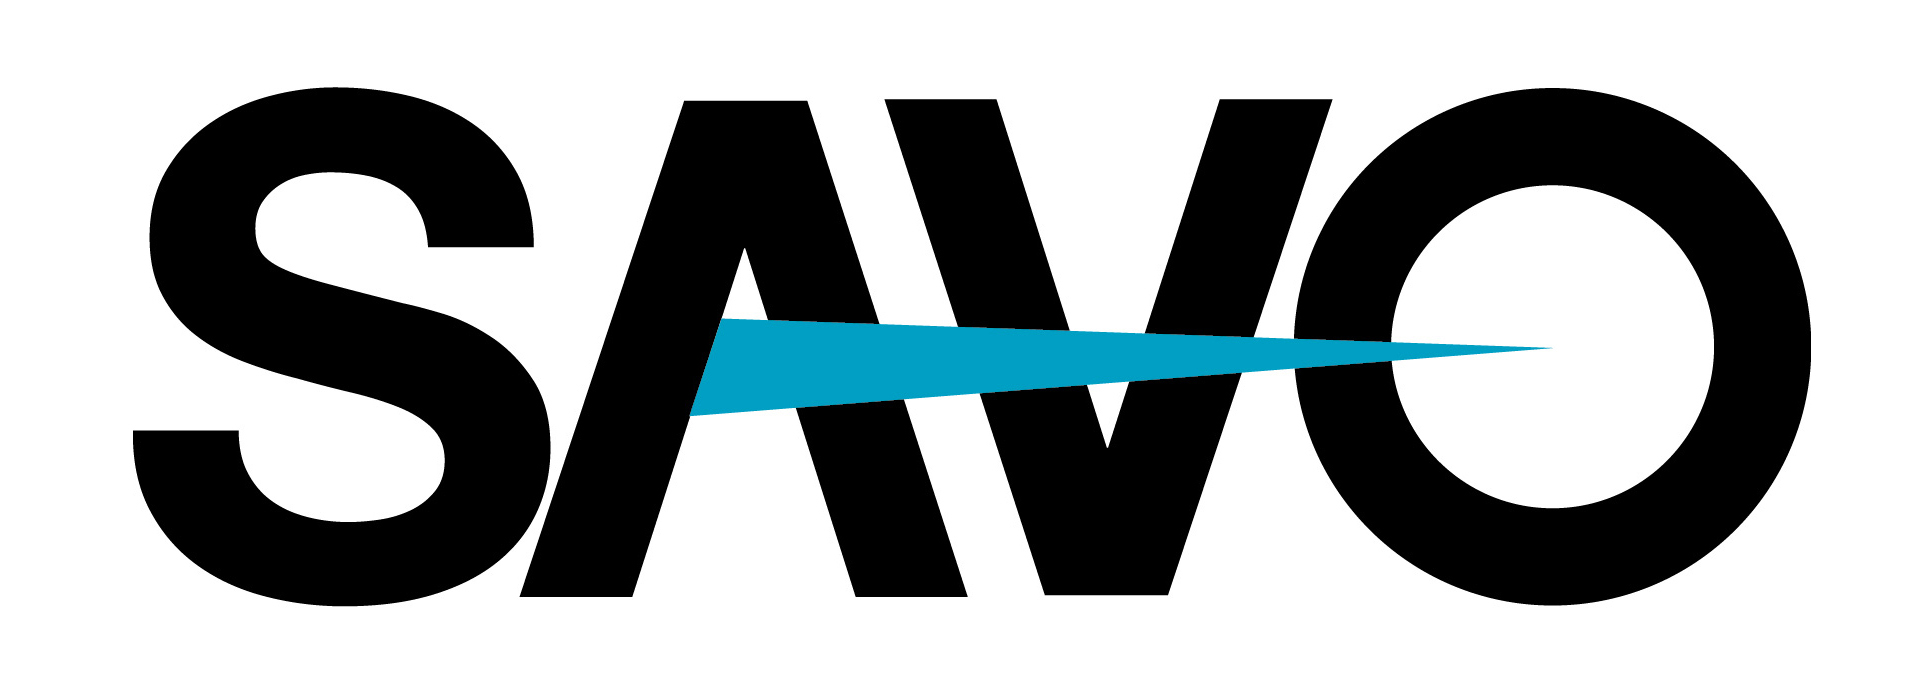 SAVO Group Ltd/The